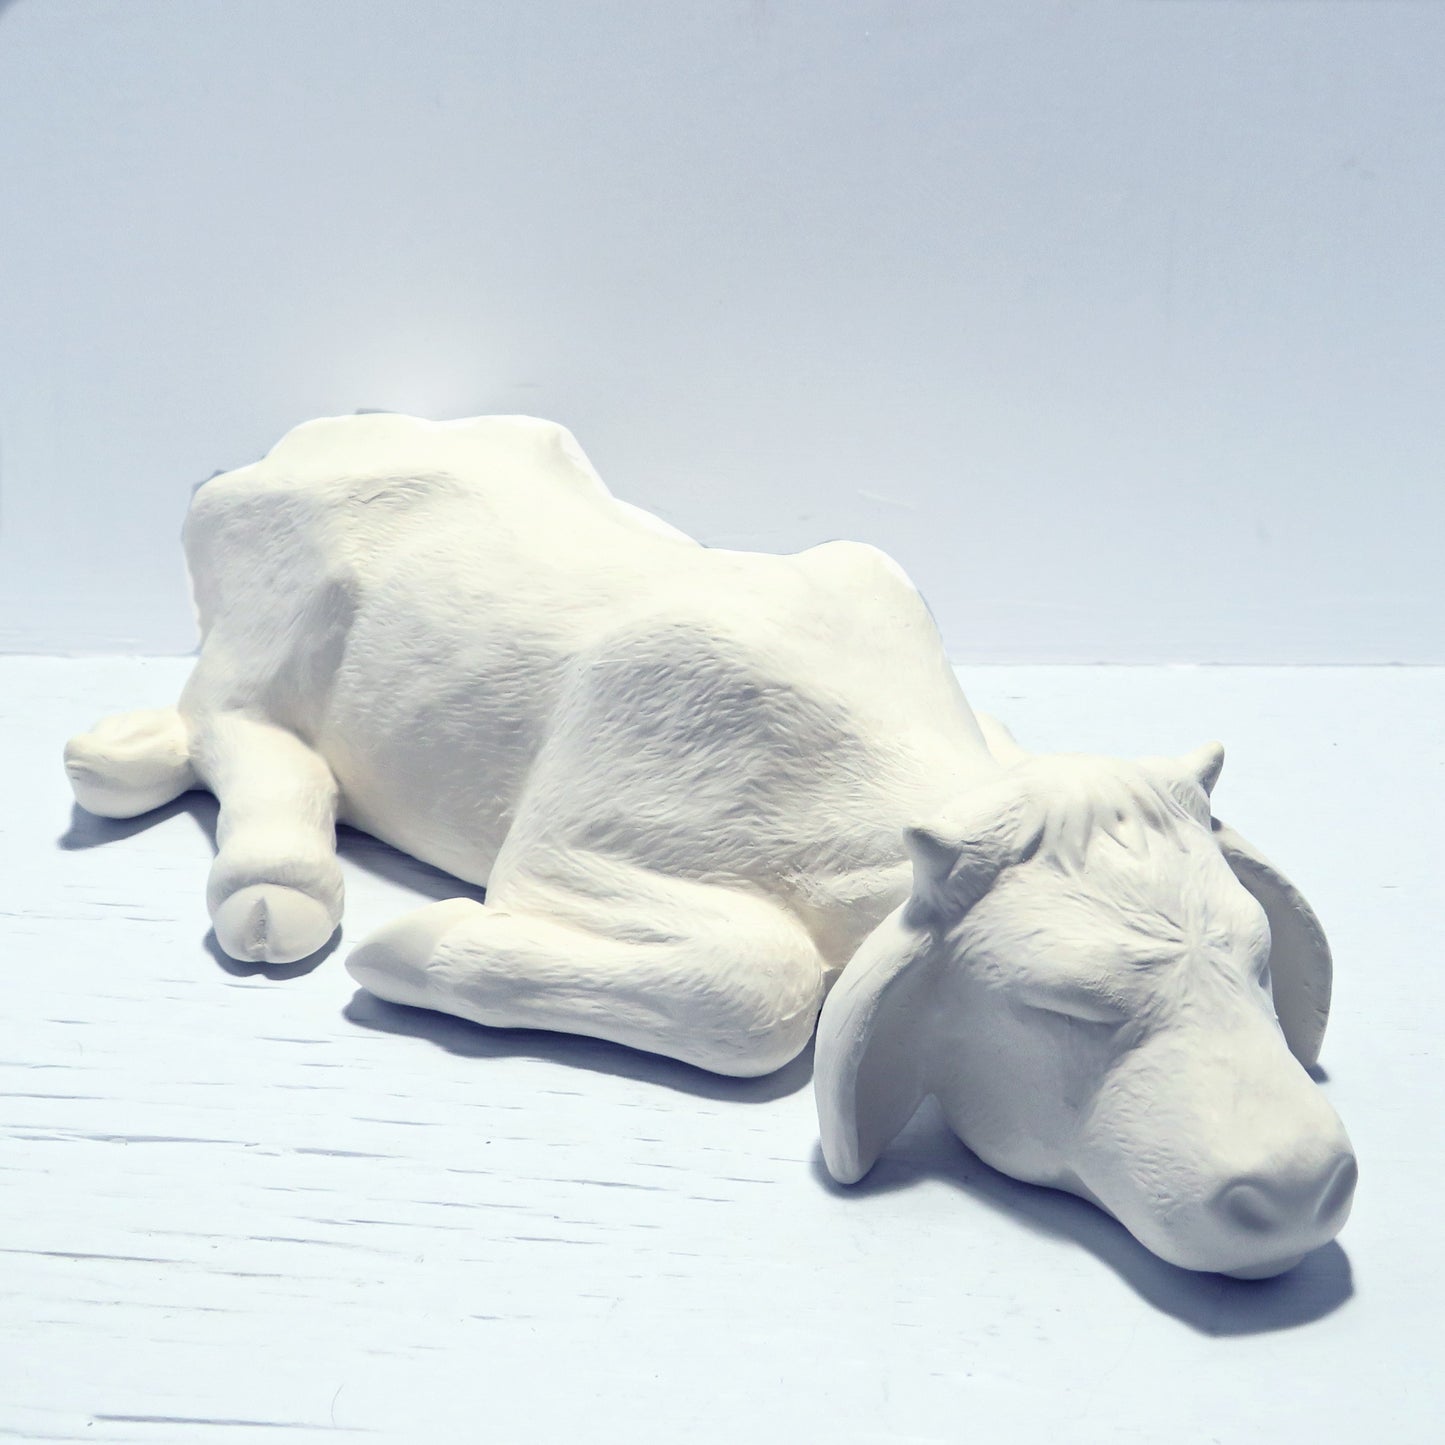 Handmade Ready to Paint Ceramic Cow Figurine, Ceramics to Paint, Paintable Ceramic Cow Statue, Cow Decor, Cow Lover Gift, DIY Ceramics